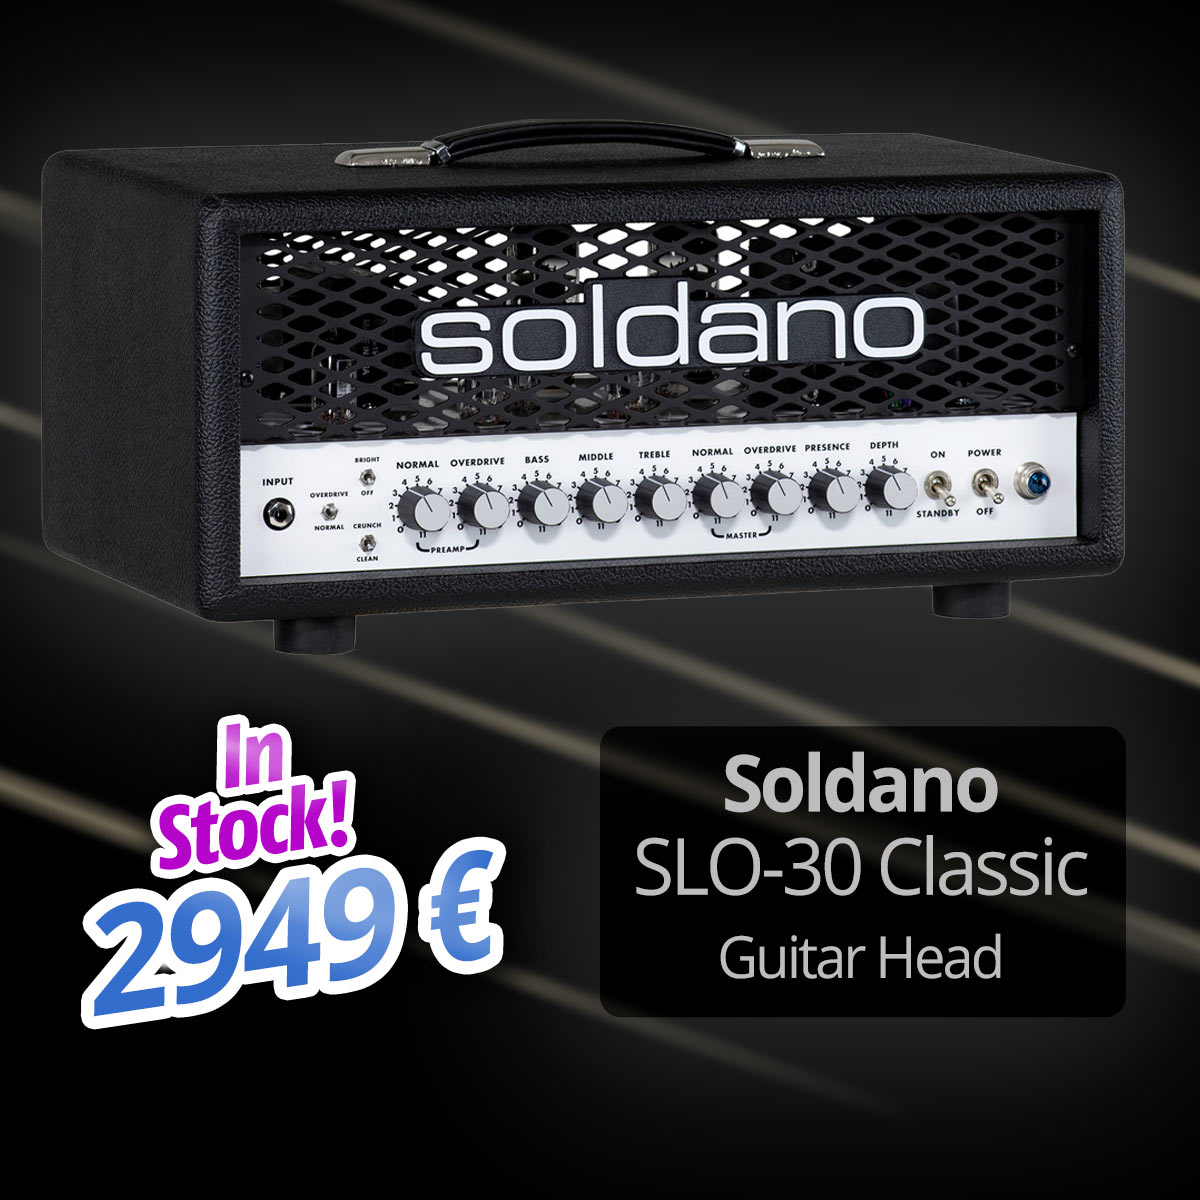 Soldano SLO-30 Classic Guitar Head - 2949 € - In Stock!